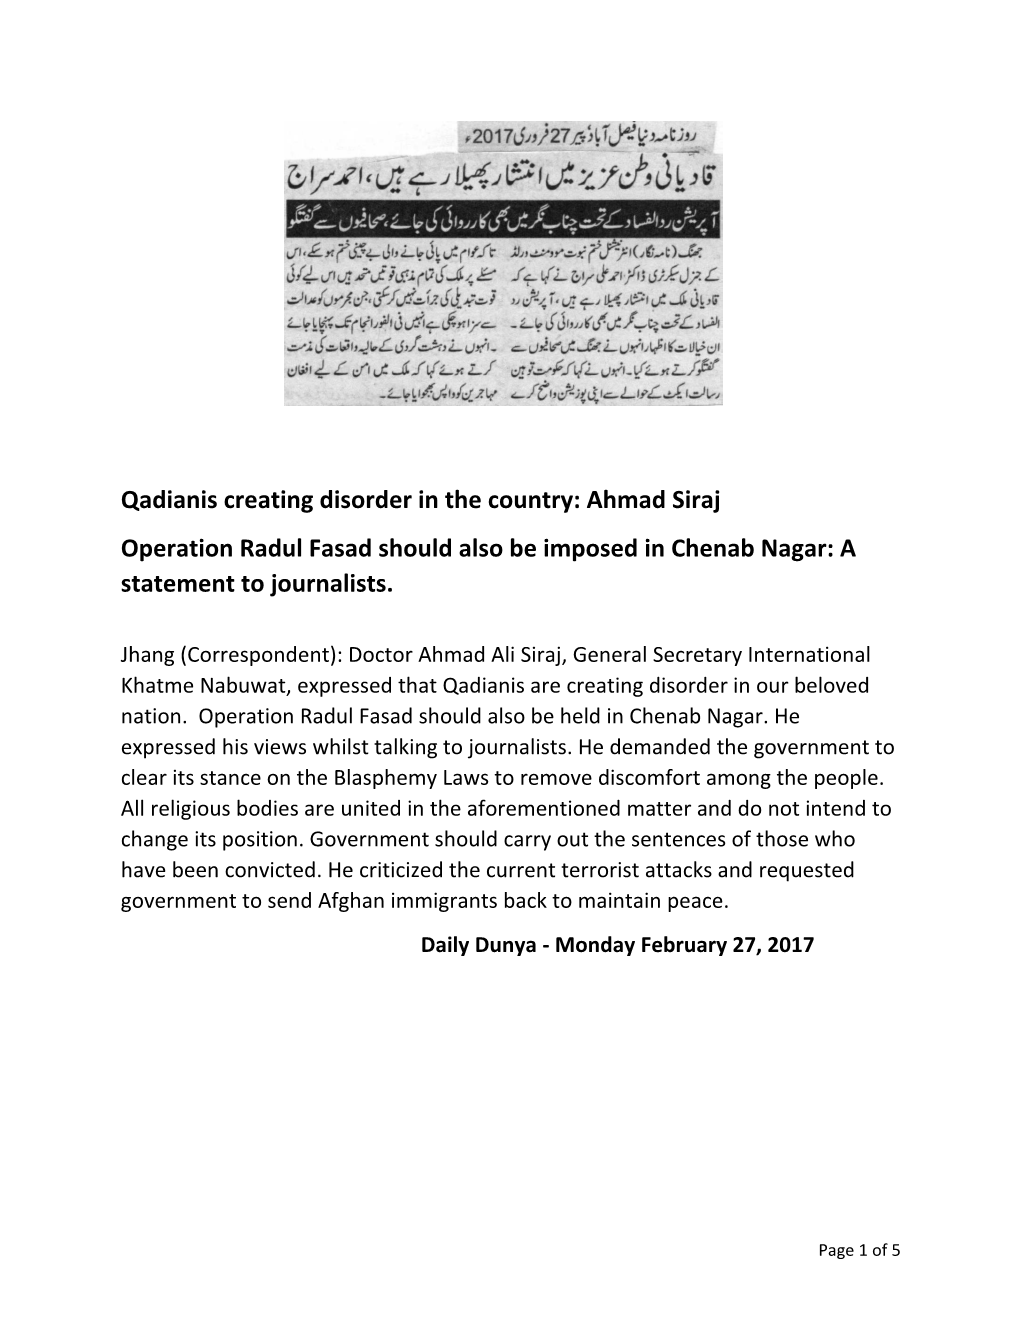 Qadianis Creating Disorder in the Country : Ahmad Siraj